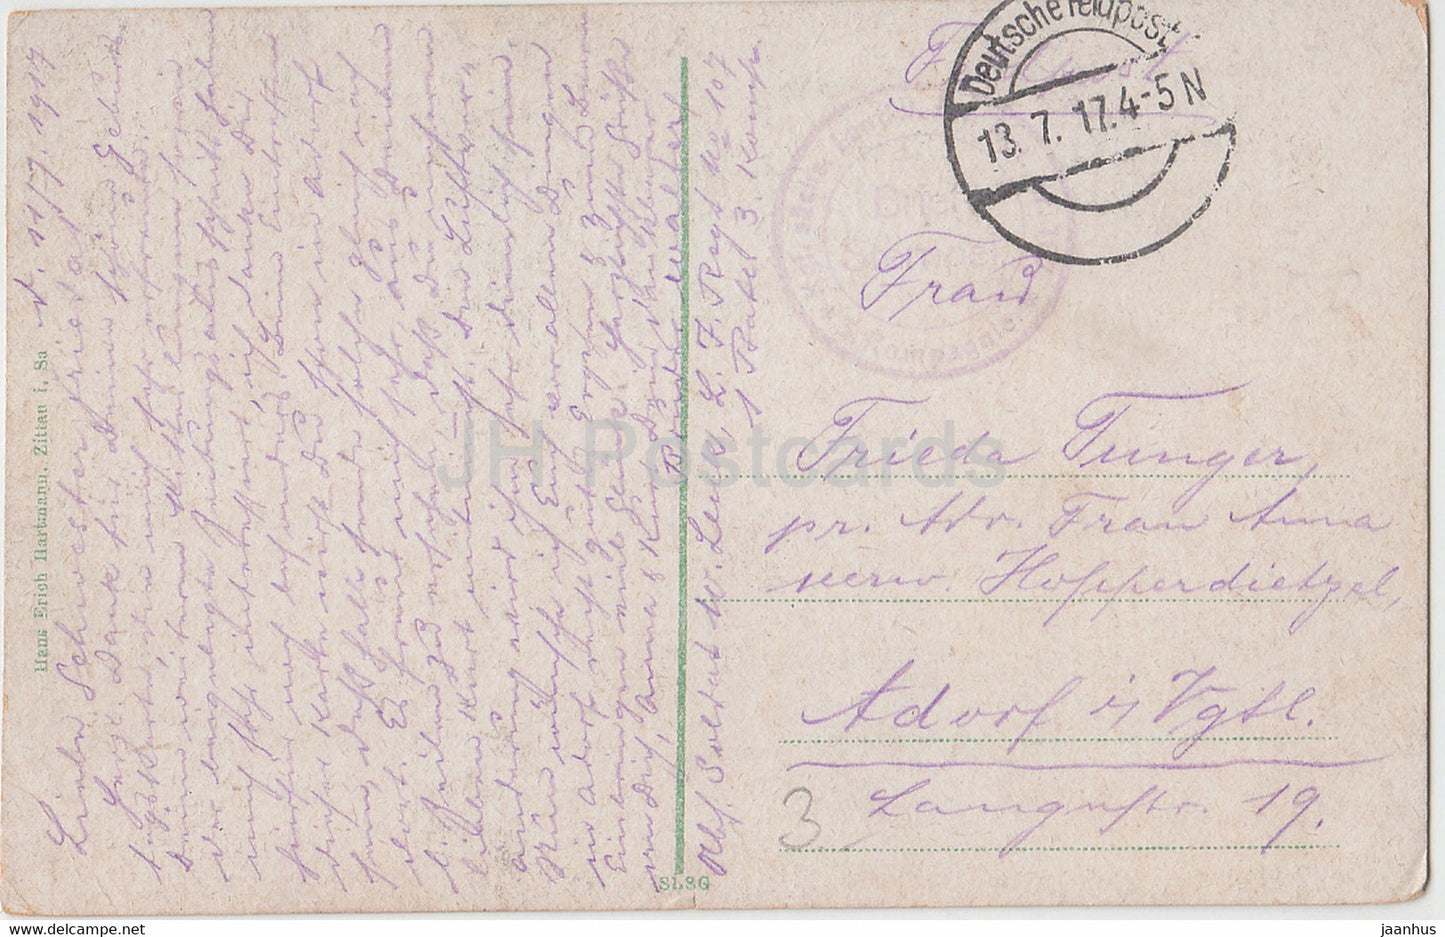 Krajobraz wiejski - Russische Landschaft - moulin à vent - Feldpost - carte postale ancienne - 1917 - Russie - utilisé